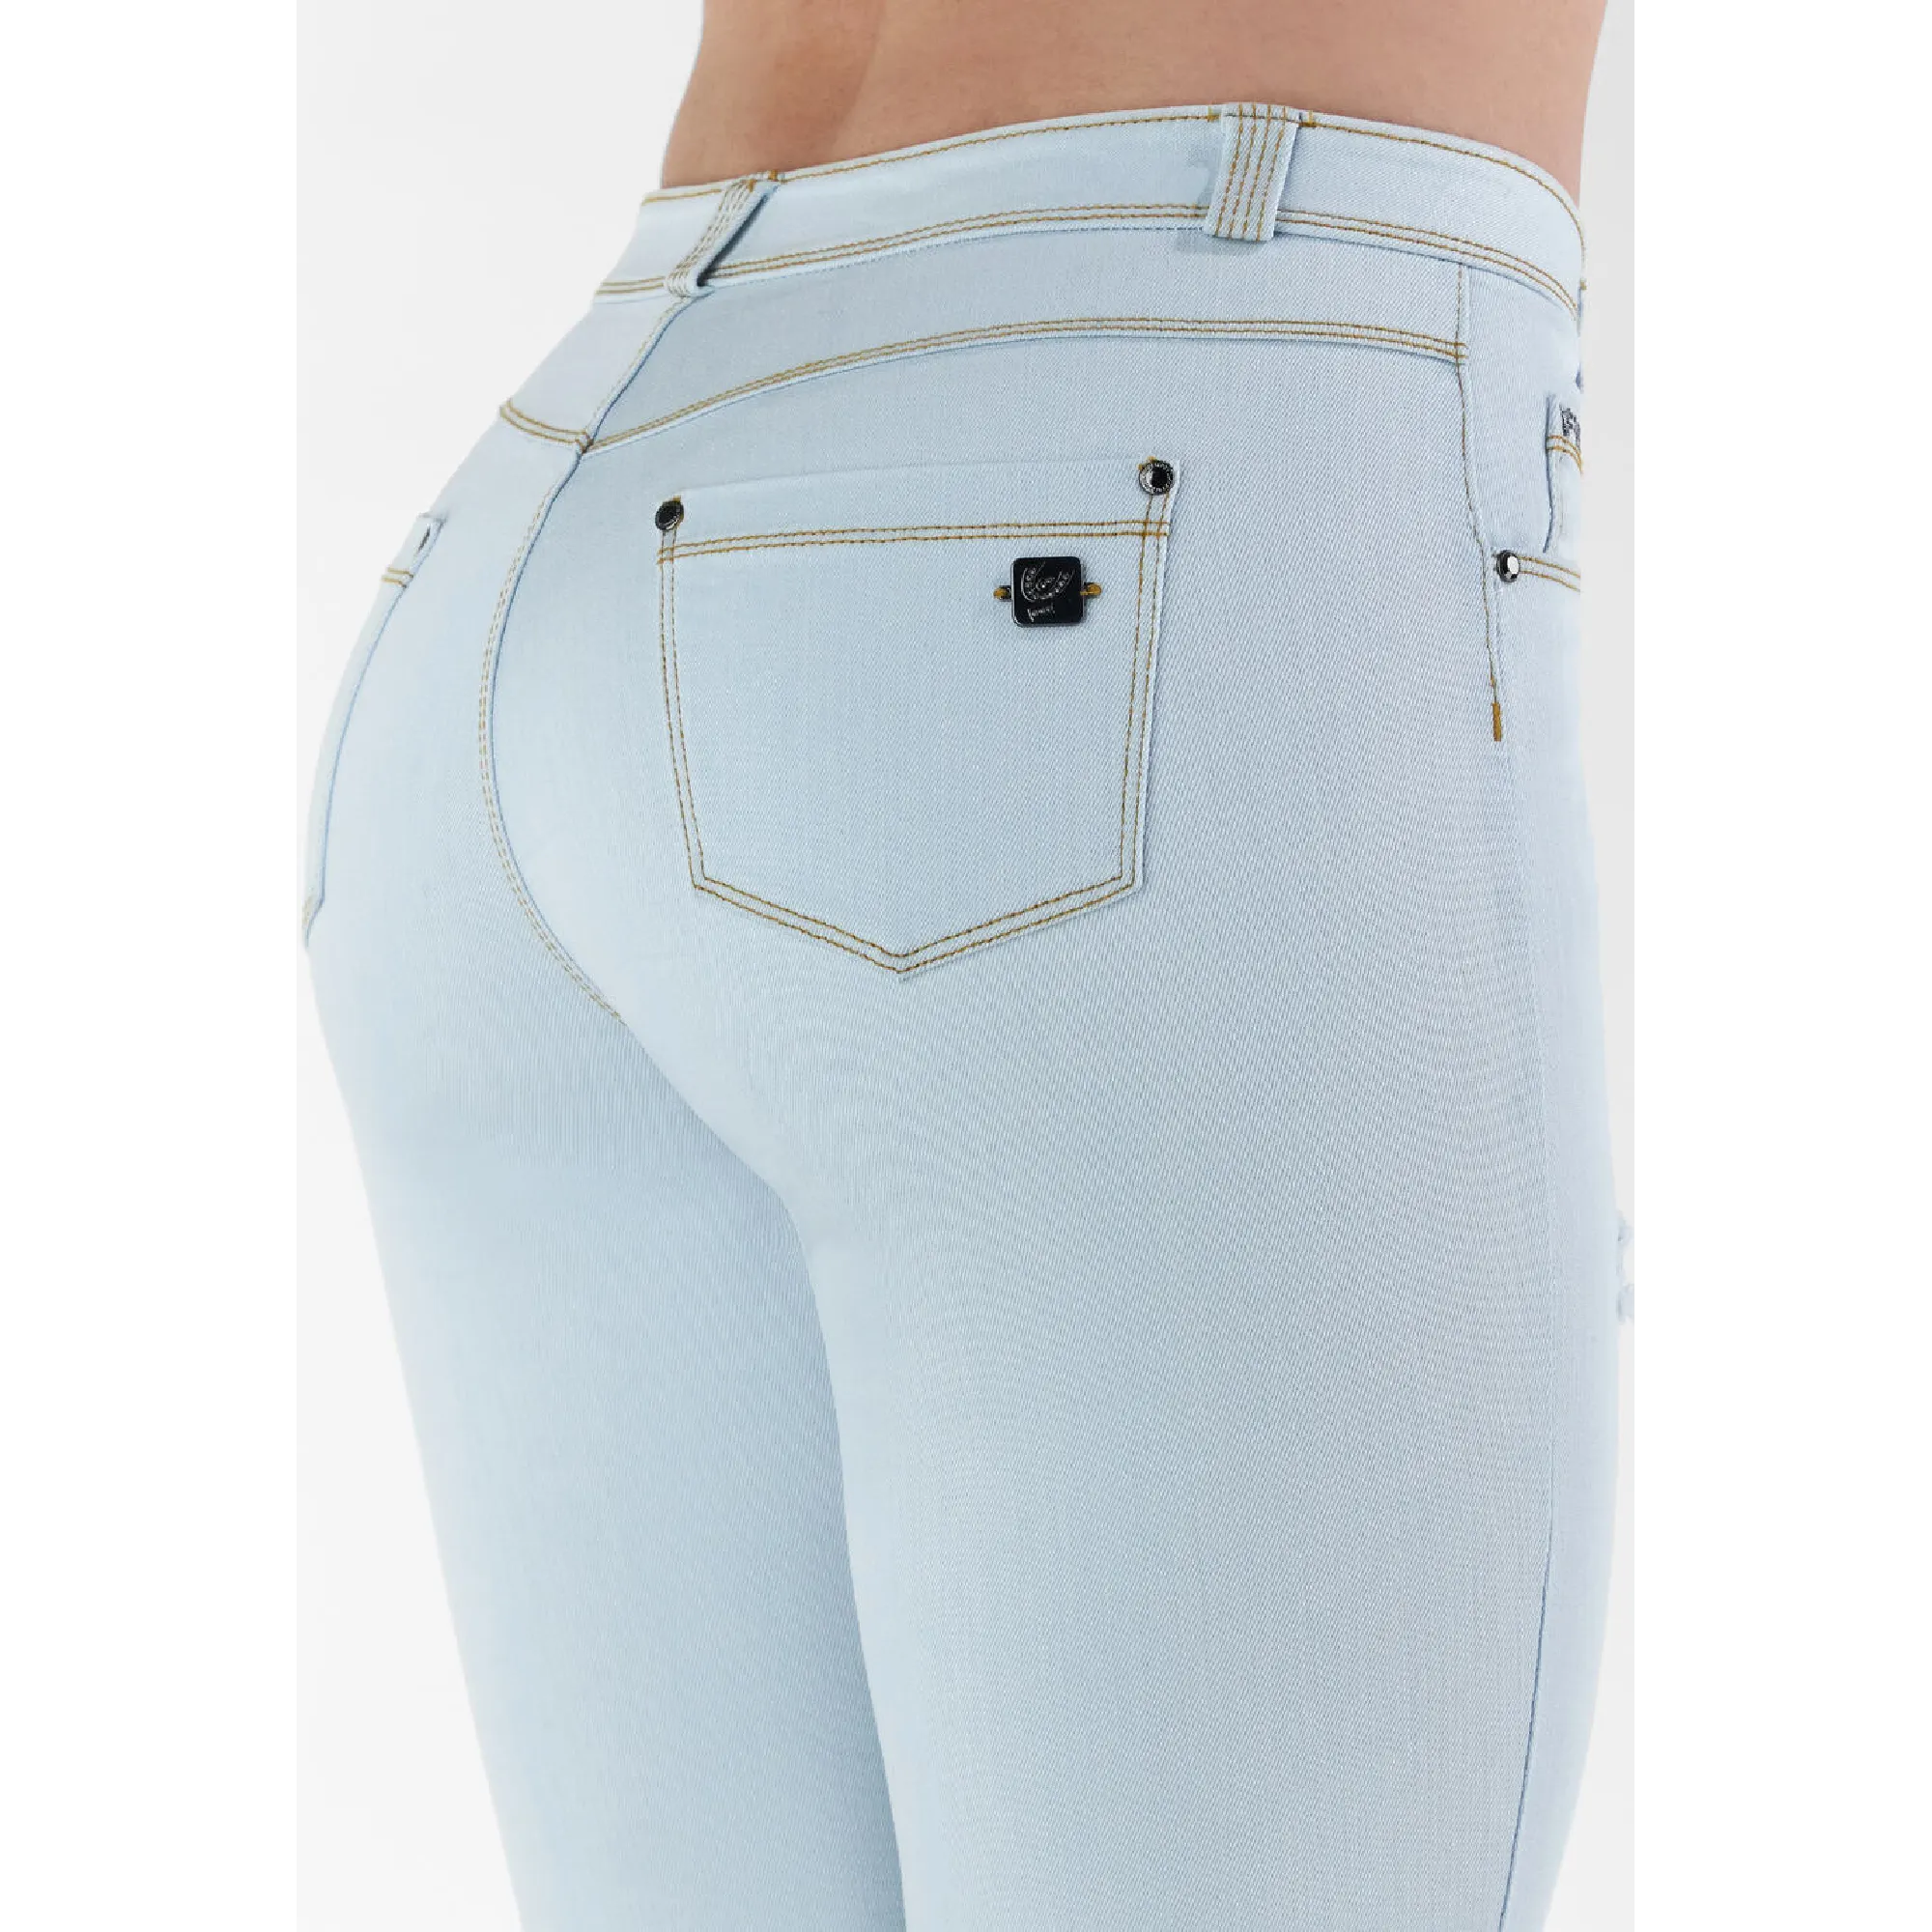 Freddy Fit Jeans - Regular Waist Wide Leg Bottom Cropped - Super White Denim - Yellow Seam - J85Y